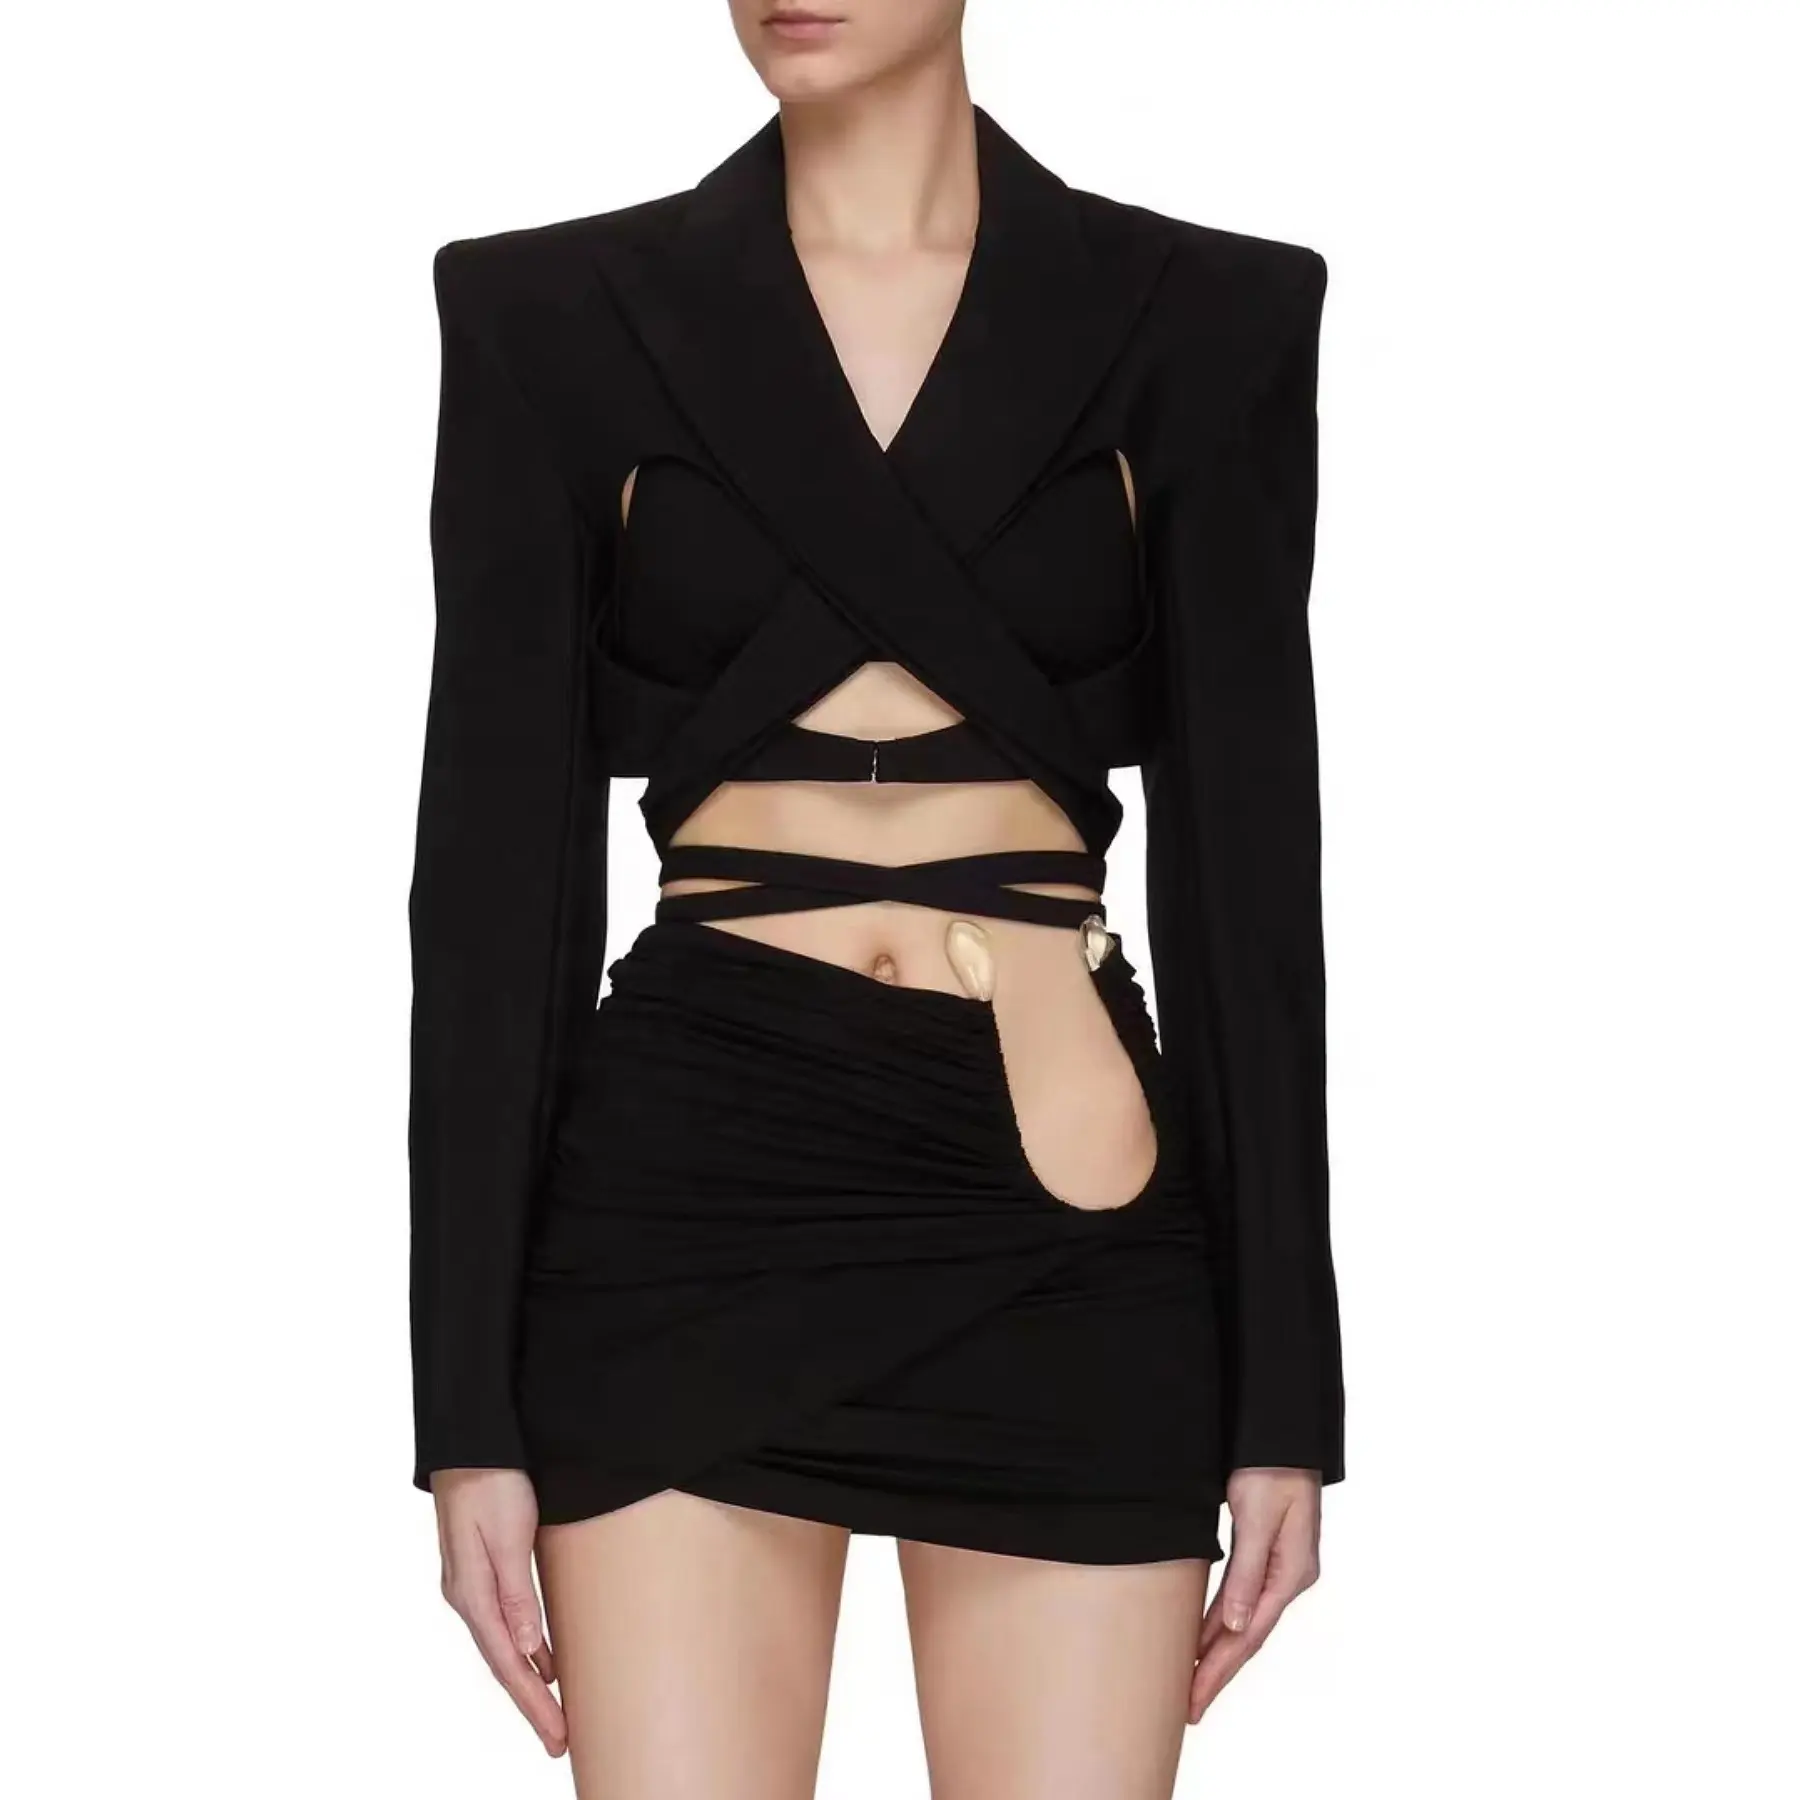 OUDINA Fashionable Spring Sense Texture Black Top Cut-out Backless Waist Suit Coat Blazers Jacket Ladies Women's Blazer